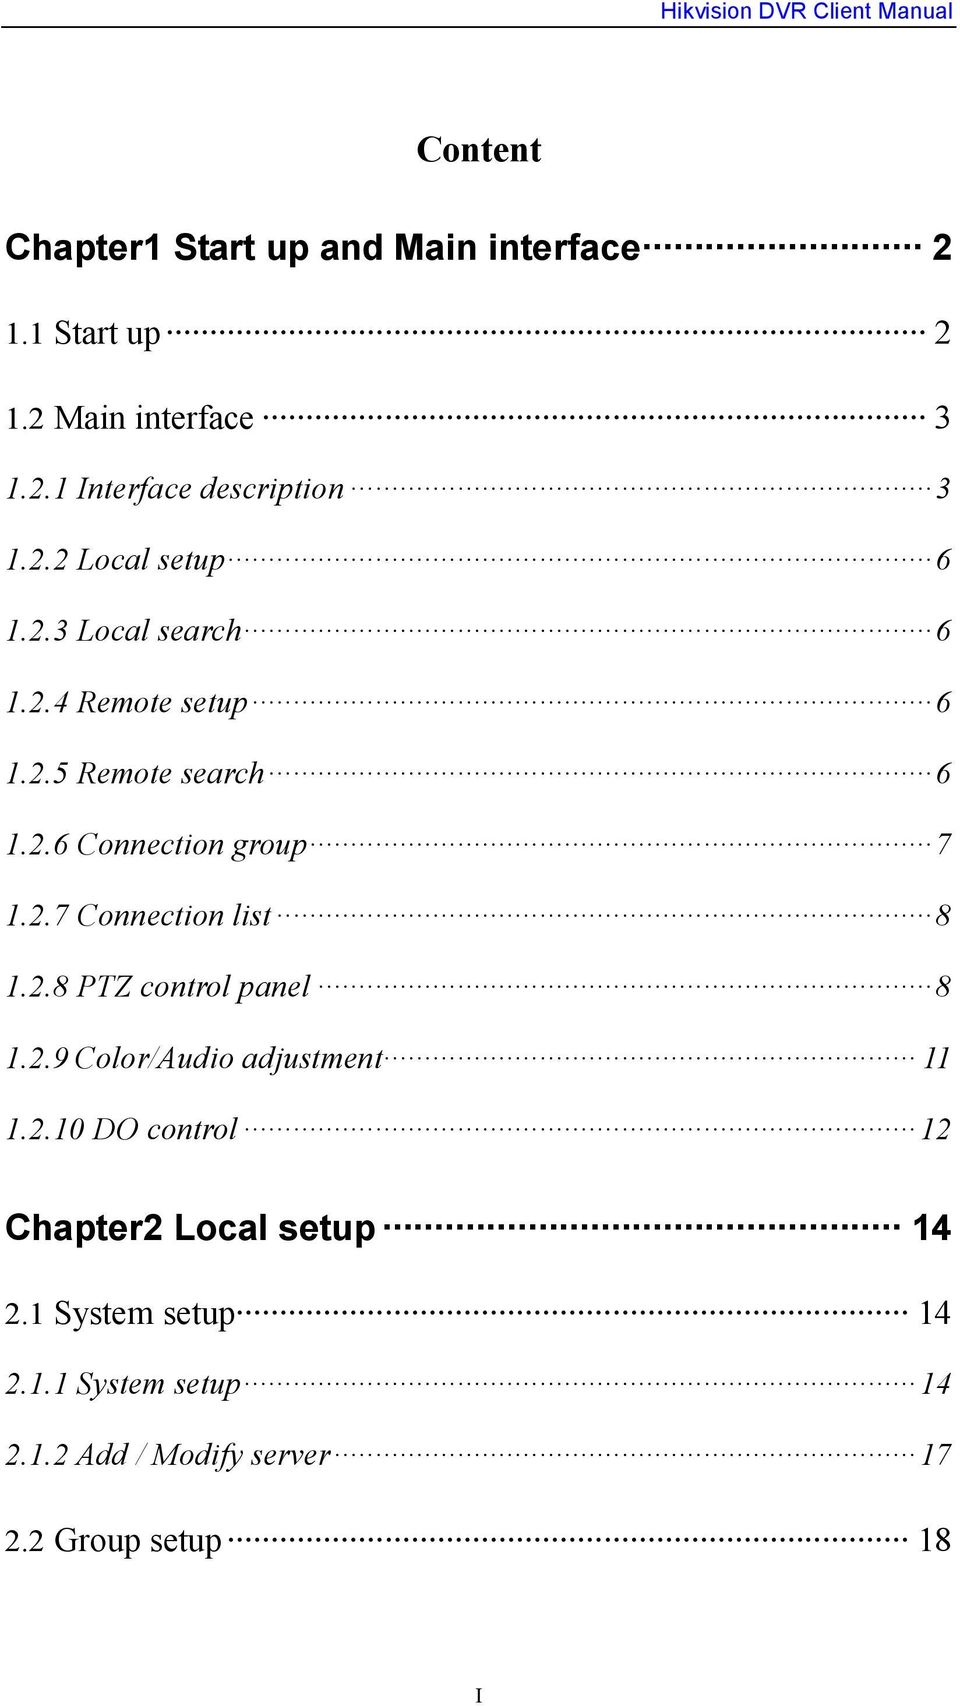 2.7 Connection list 8 1.2.8 PTZ control panel 8 1.2.9 Color/Audio adjustment 11 1.2.10 DO control 12 Chapter2 Local setup 14 2.